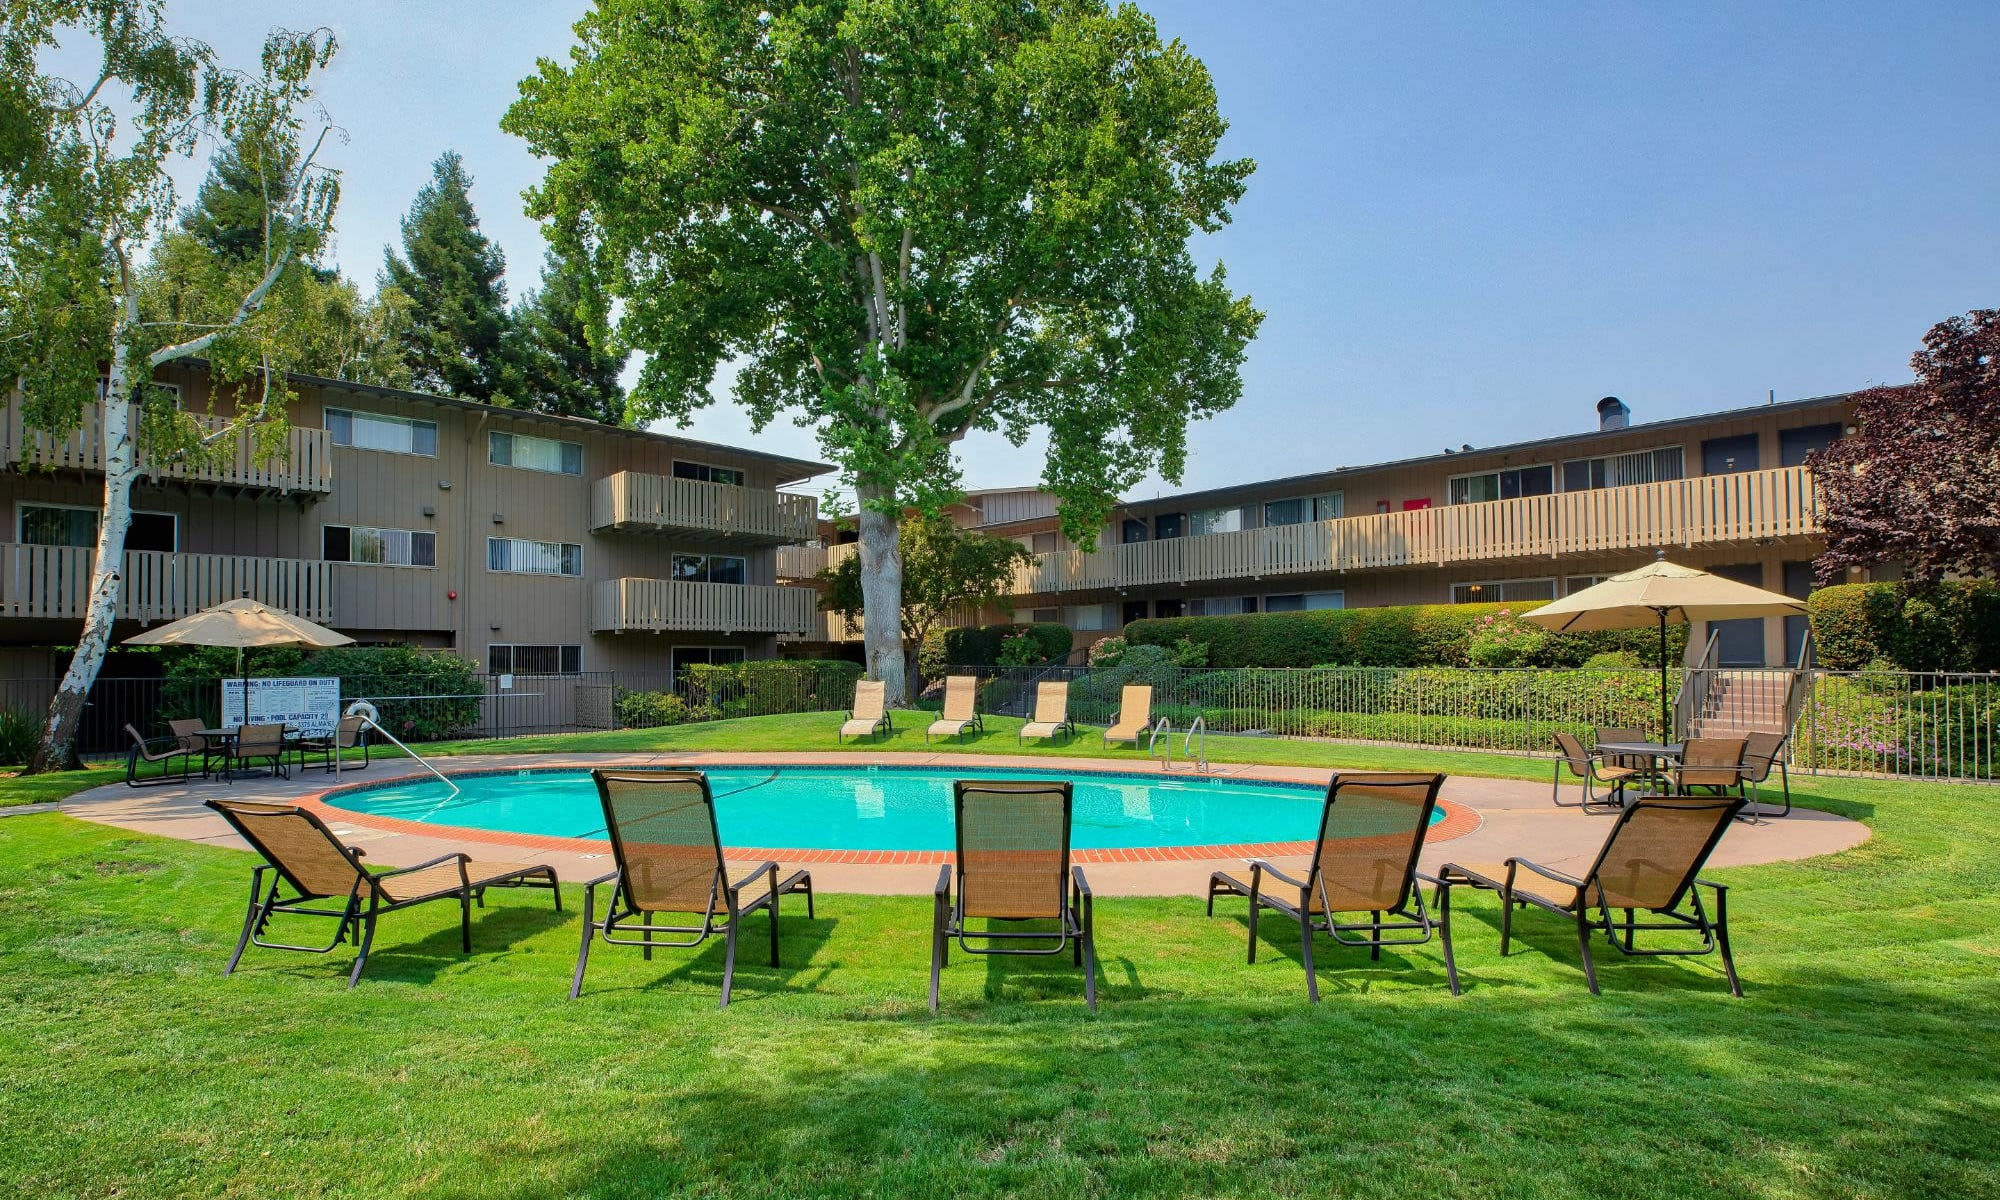 Pool area at Stanford Villa Apartment Homes in Palo Alto, California